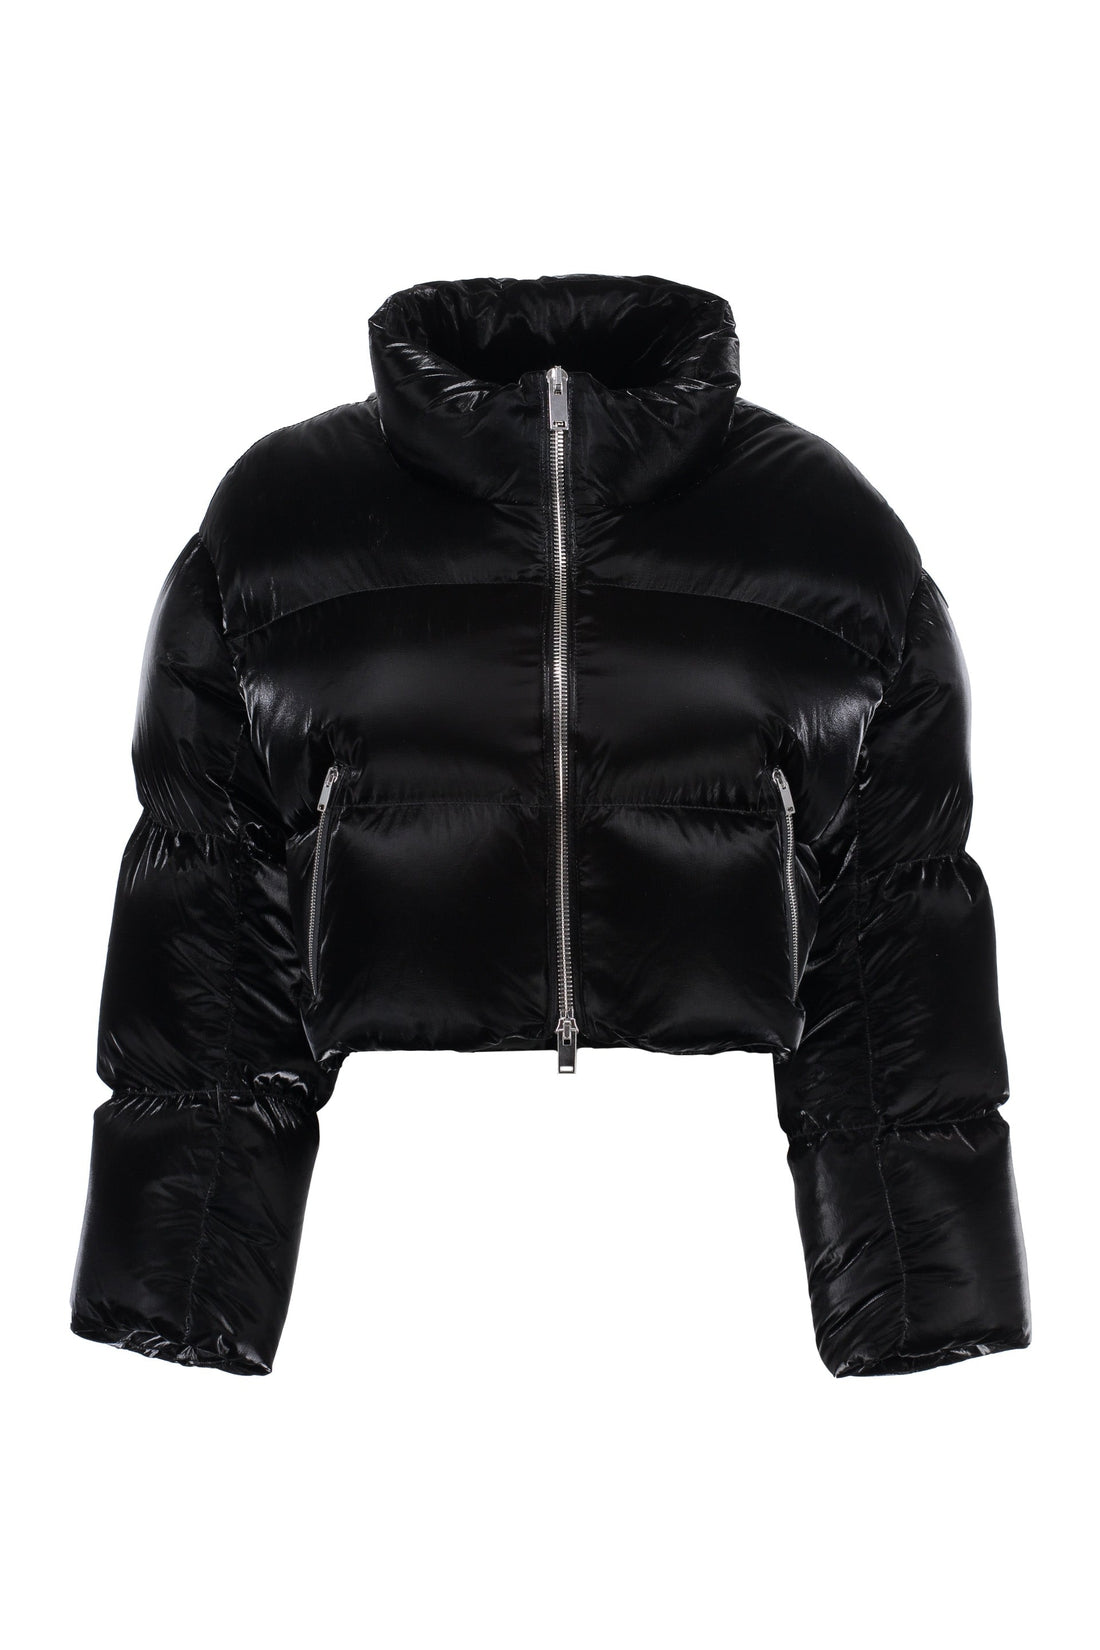 Khaite-OUTLET-SALE-Techno-nylon down jacket-ARCHIVIST